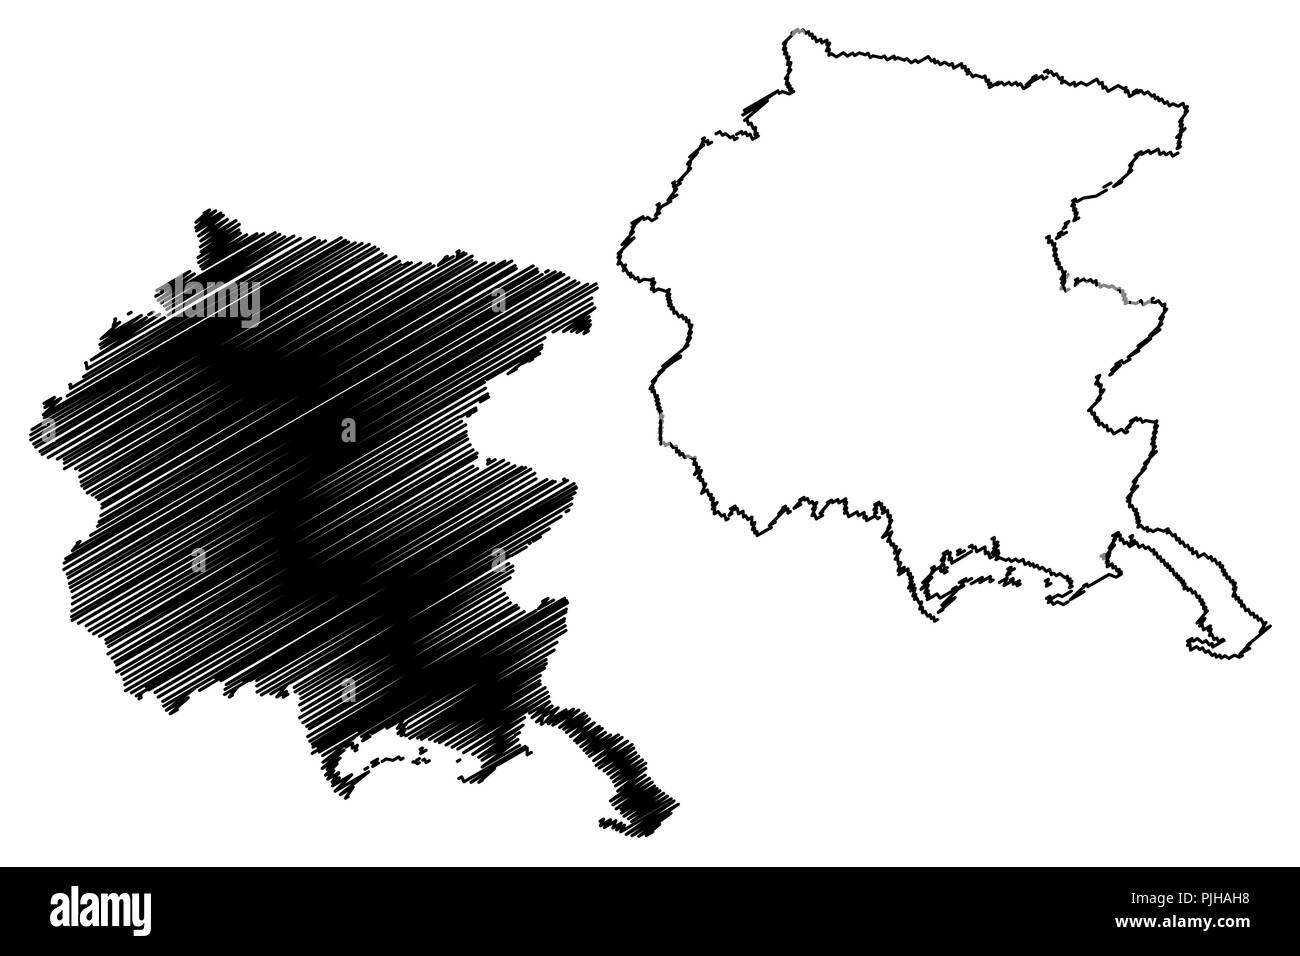 Friaul-julisch Venetien (Autonome Region Italiens) Karte Vektor-illustration, kritzeln Skizze Friaul-Julisch Venetien Karte Stock Vektor